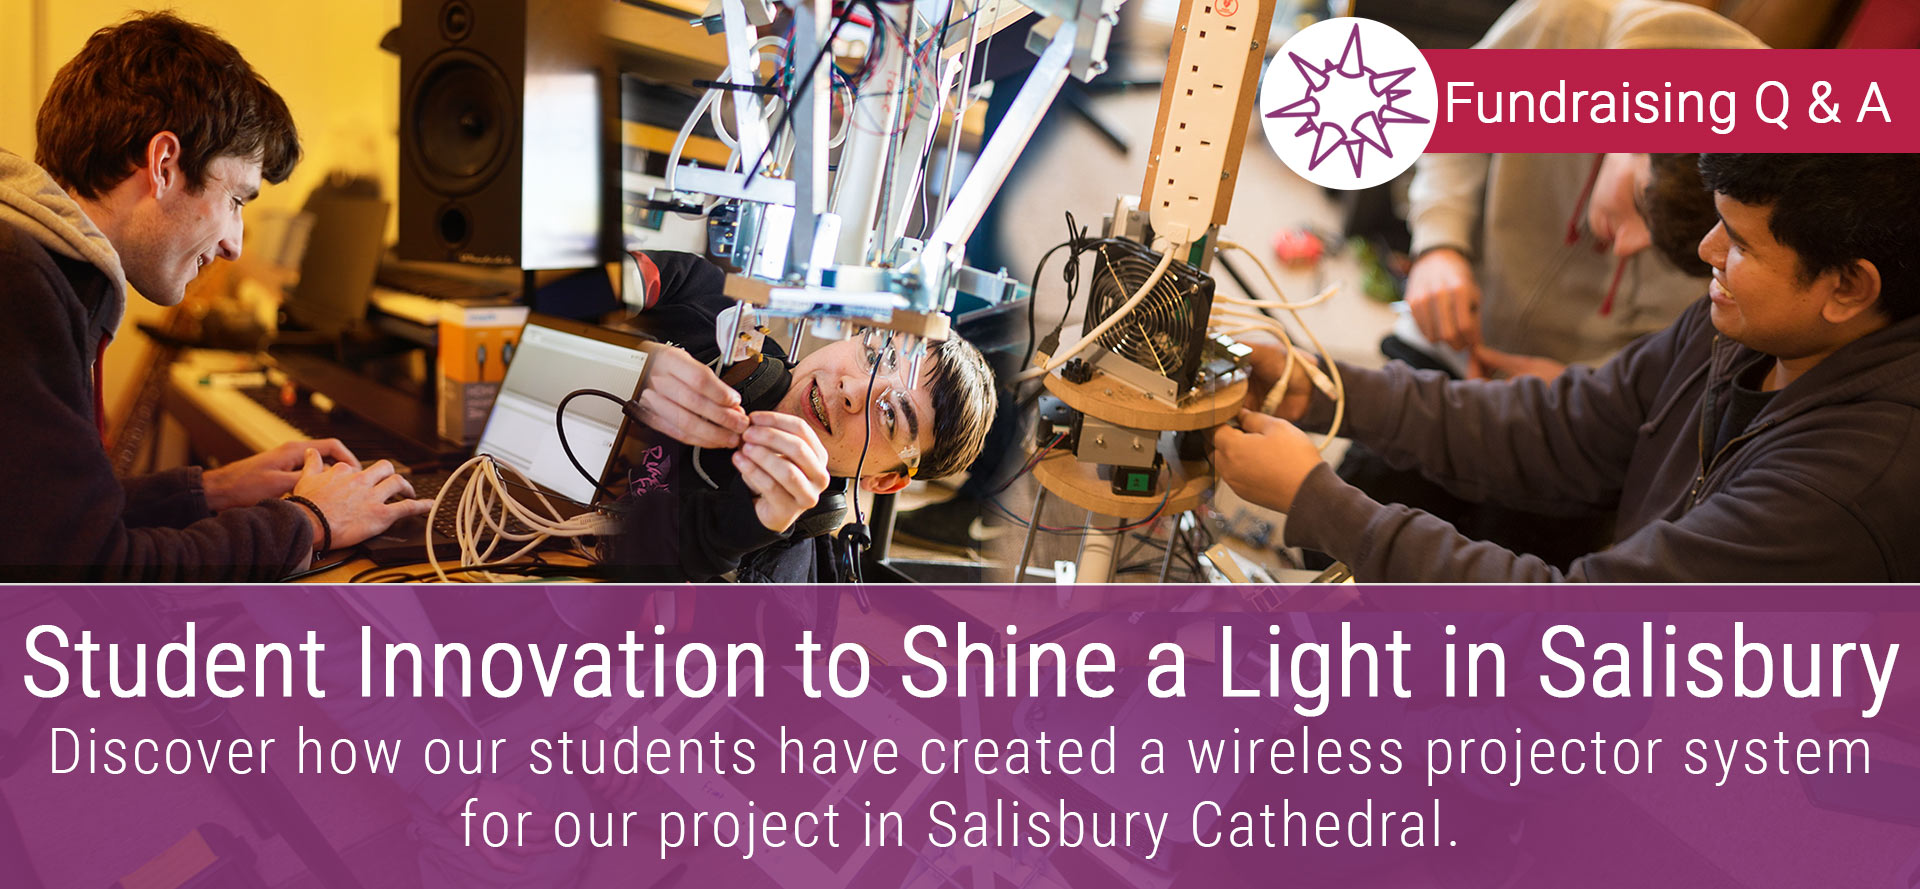 Student Innovation Shines A Light in Salisbury